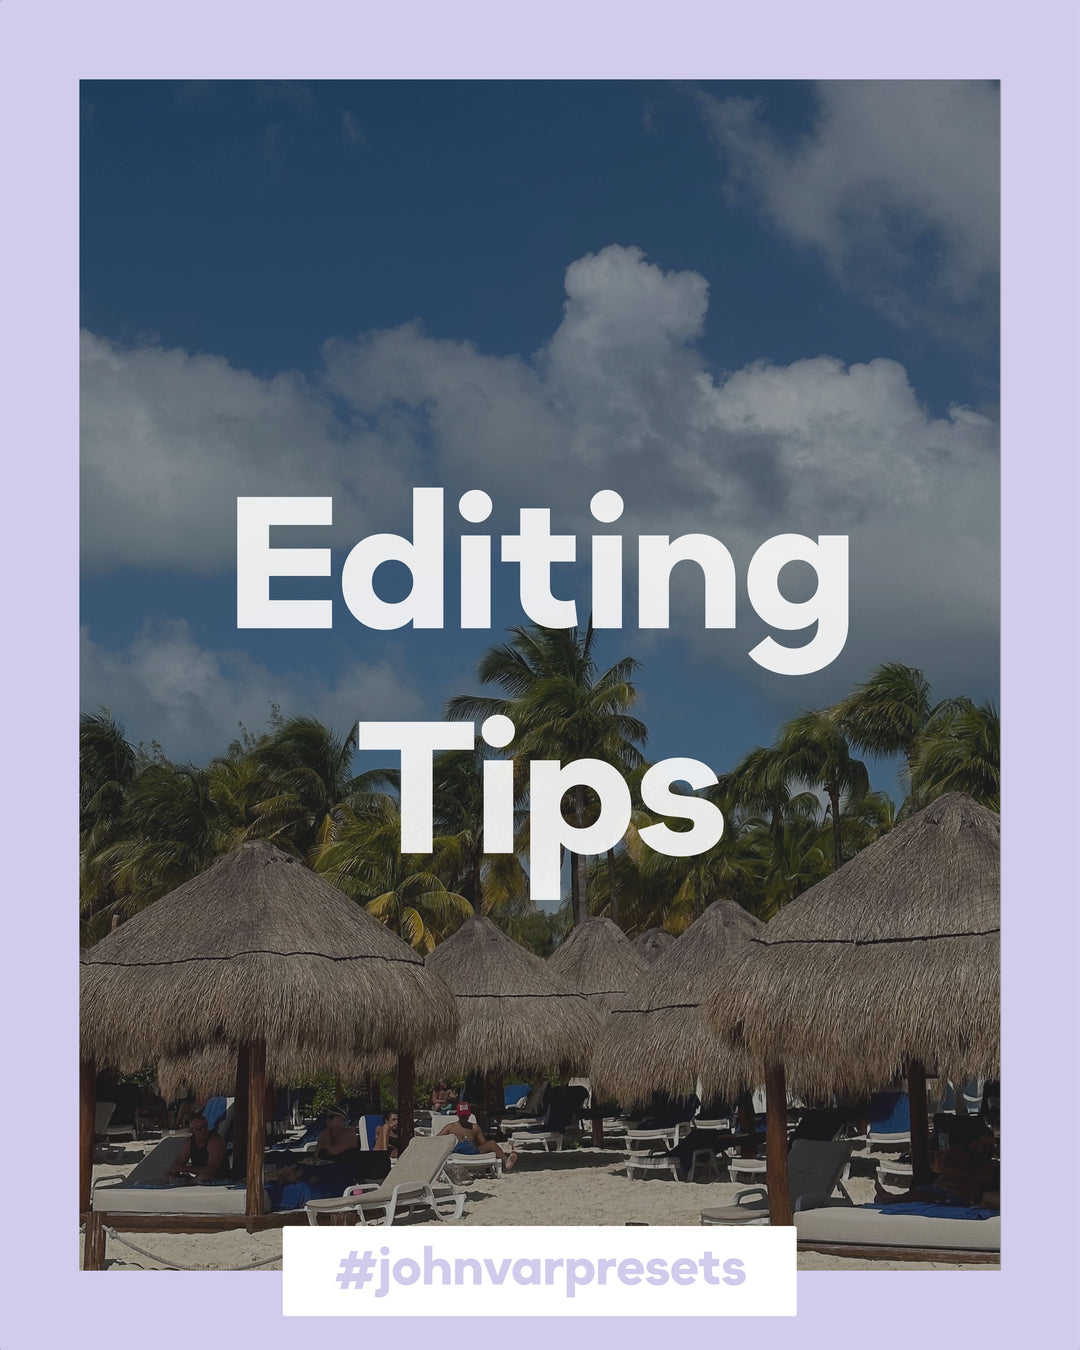 Editing tips